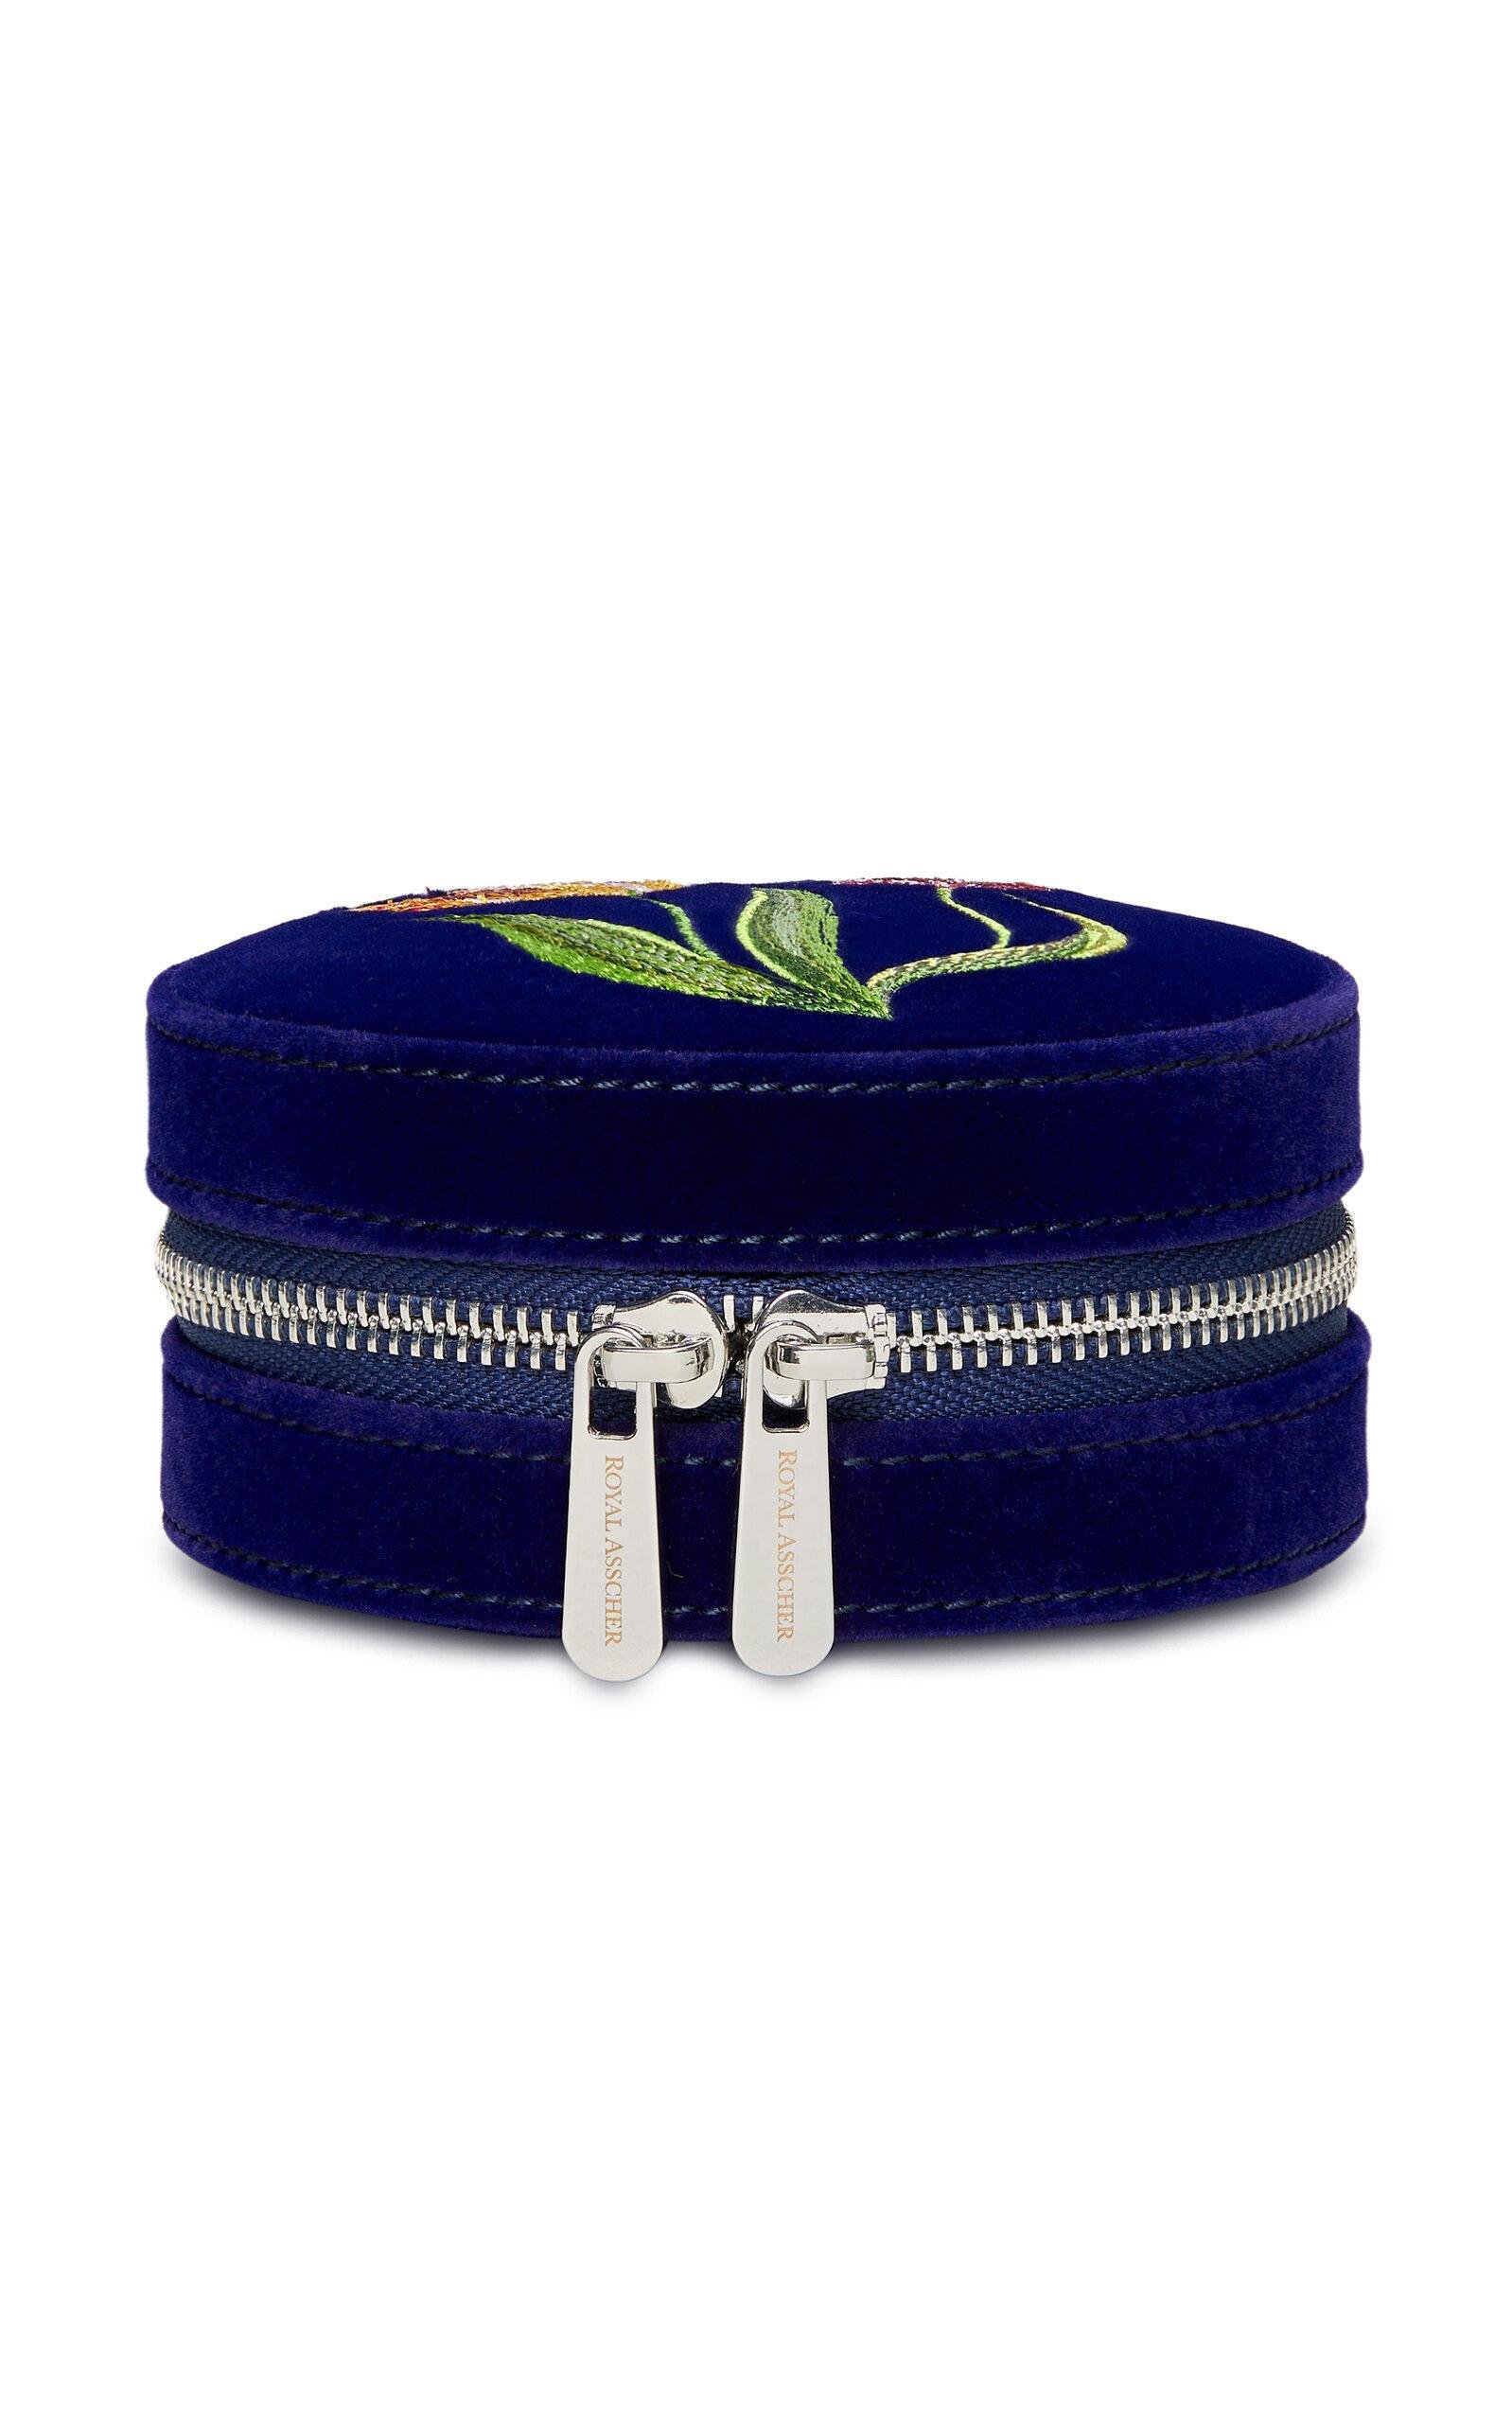 WOLF - x Royal Asscher Velvet Jewelry Case - Blue - Moda Operandi by WOLF